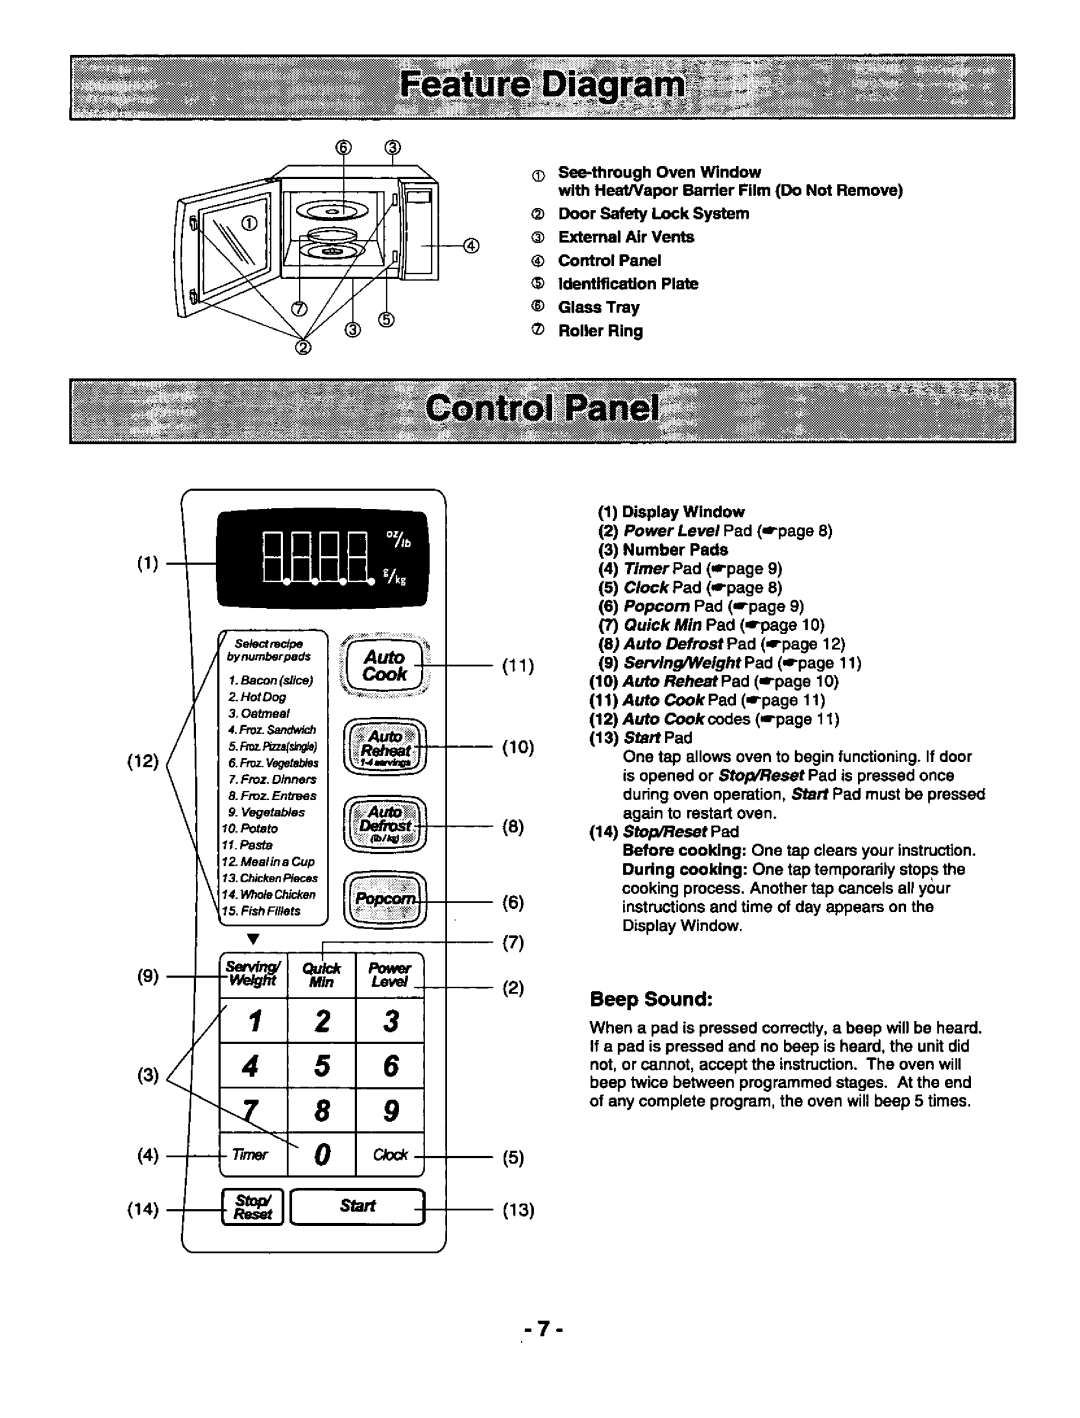 Panasonic NN-L839 manual 